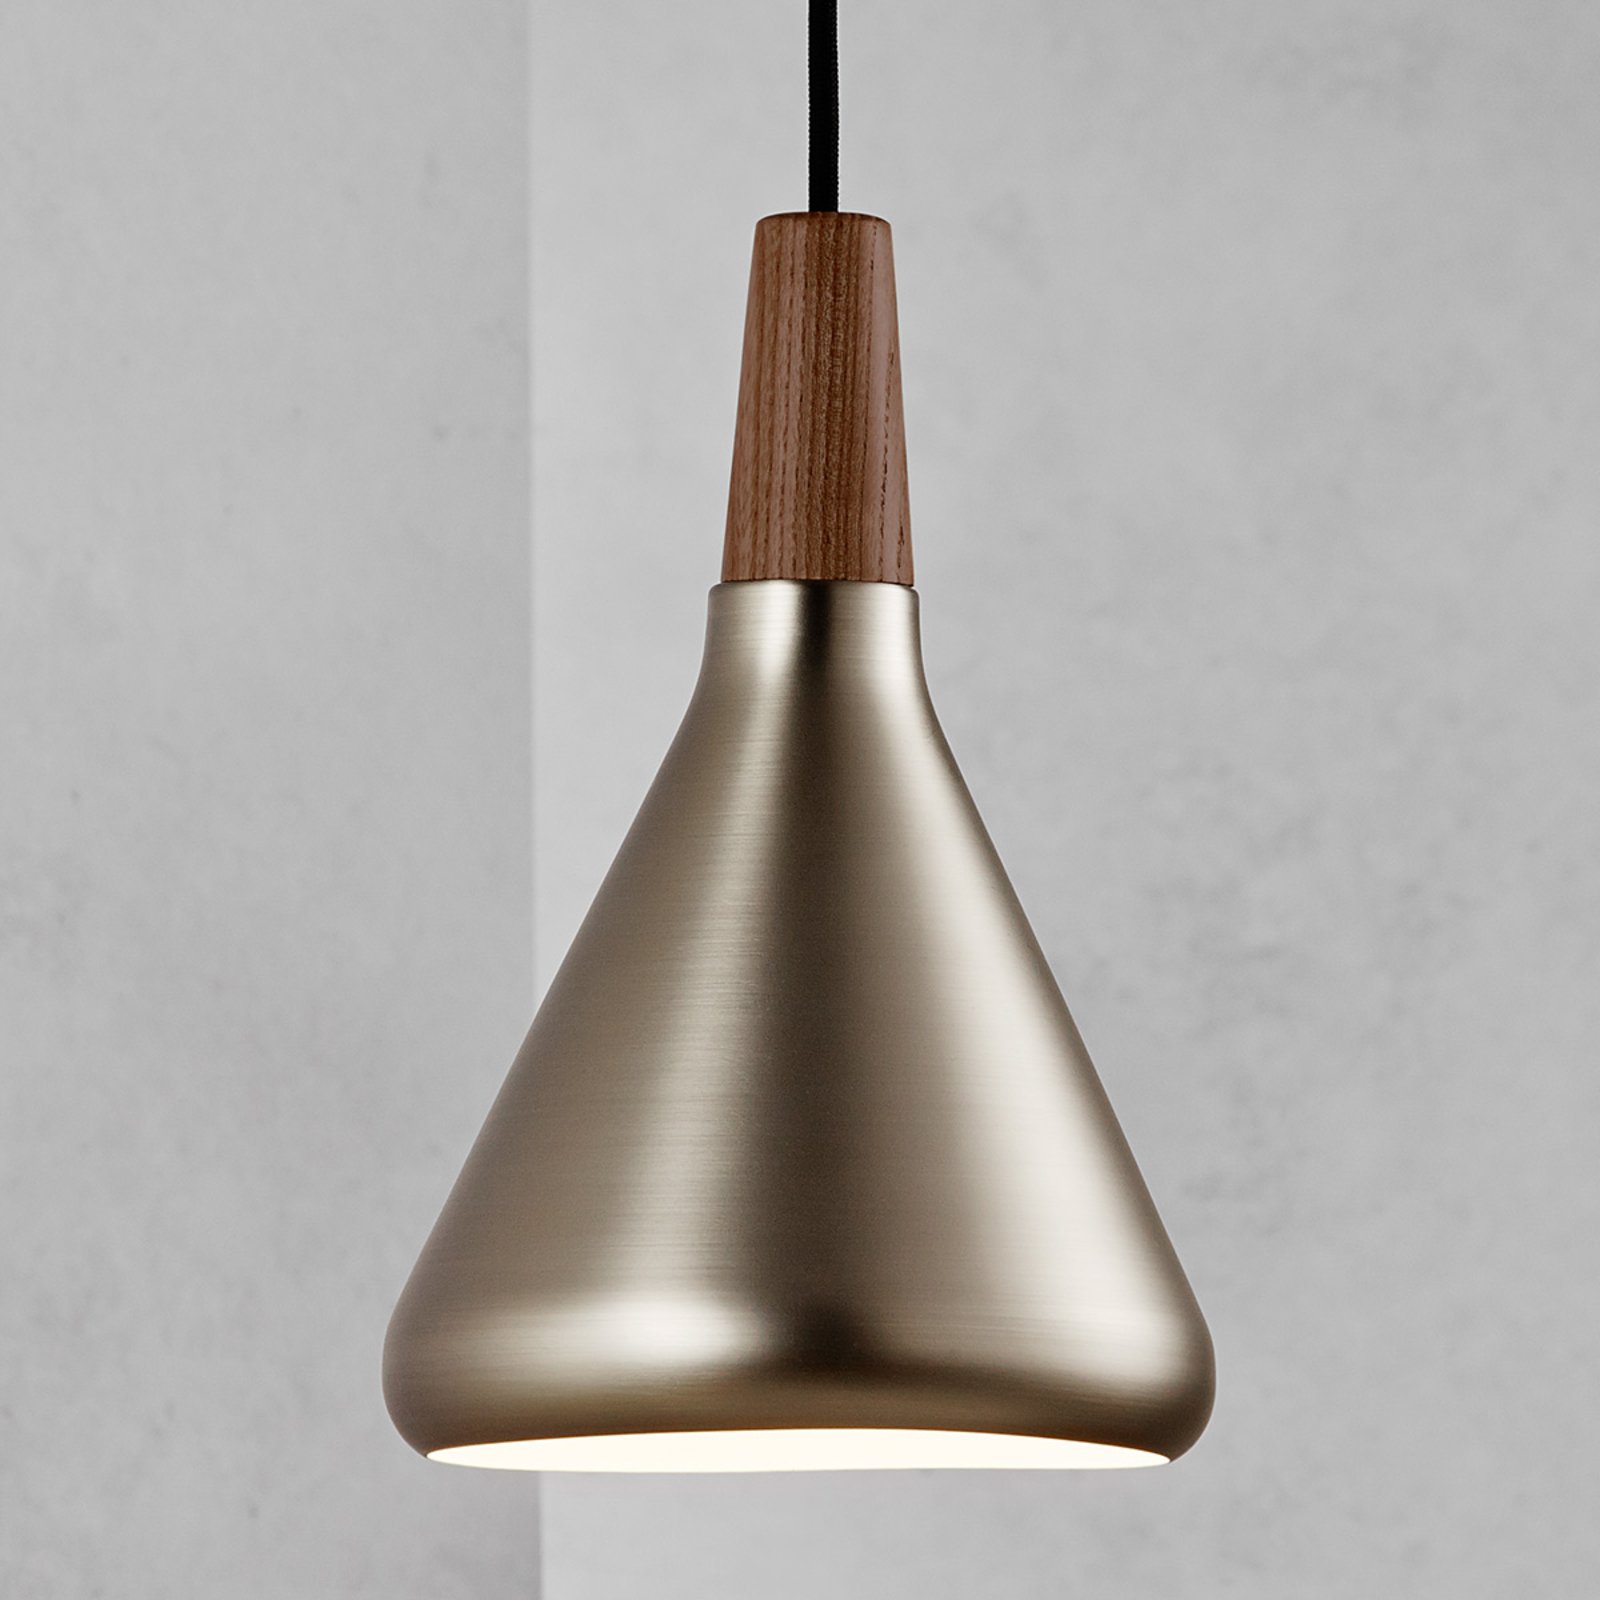 Hanglamp Nori van metaal, staalkleurig, Ø 18 cm